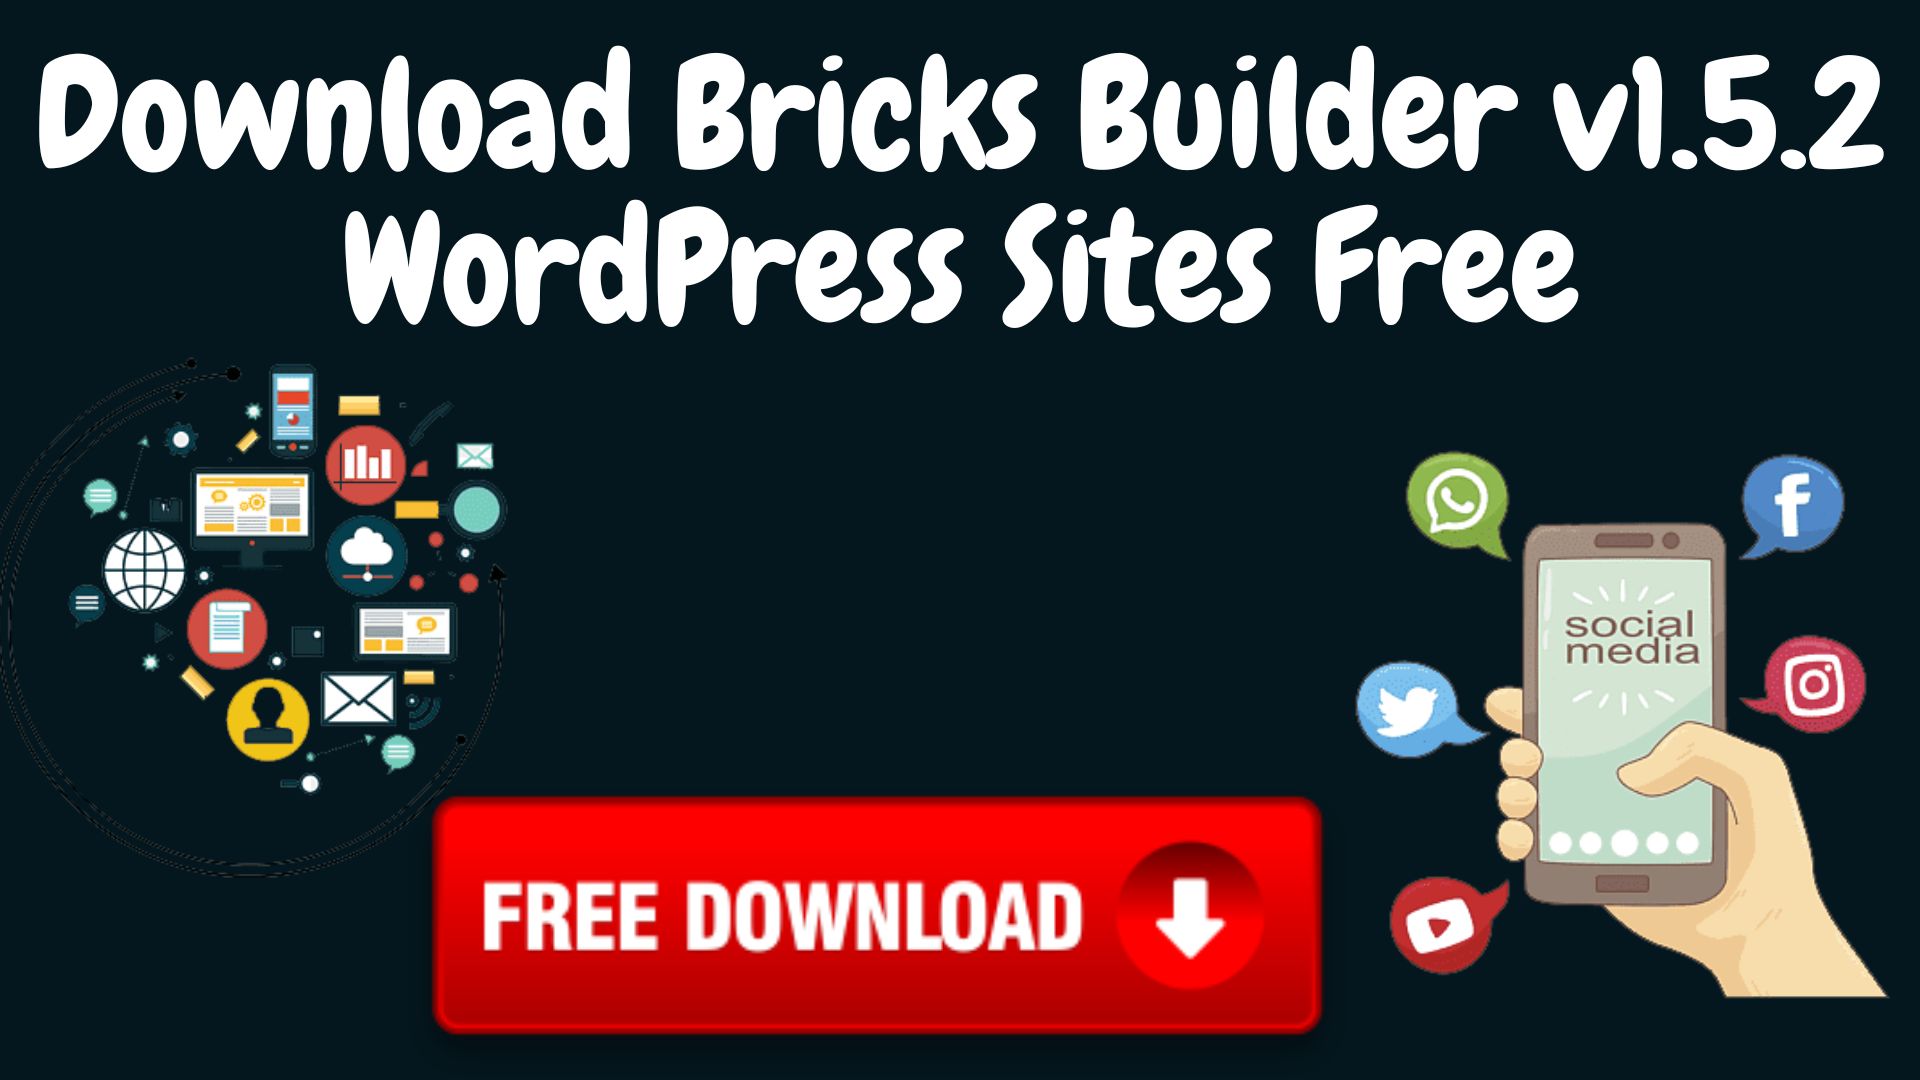 Download Bricks Builder V1.5.2 Wordpress Sites Free